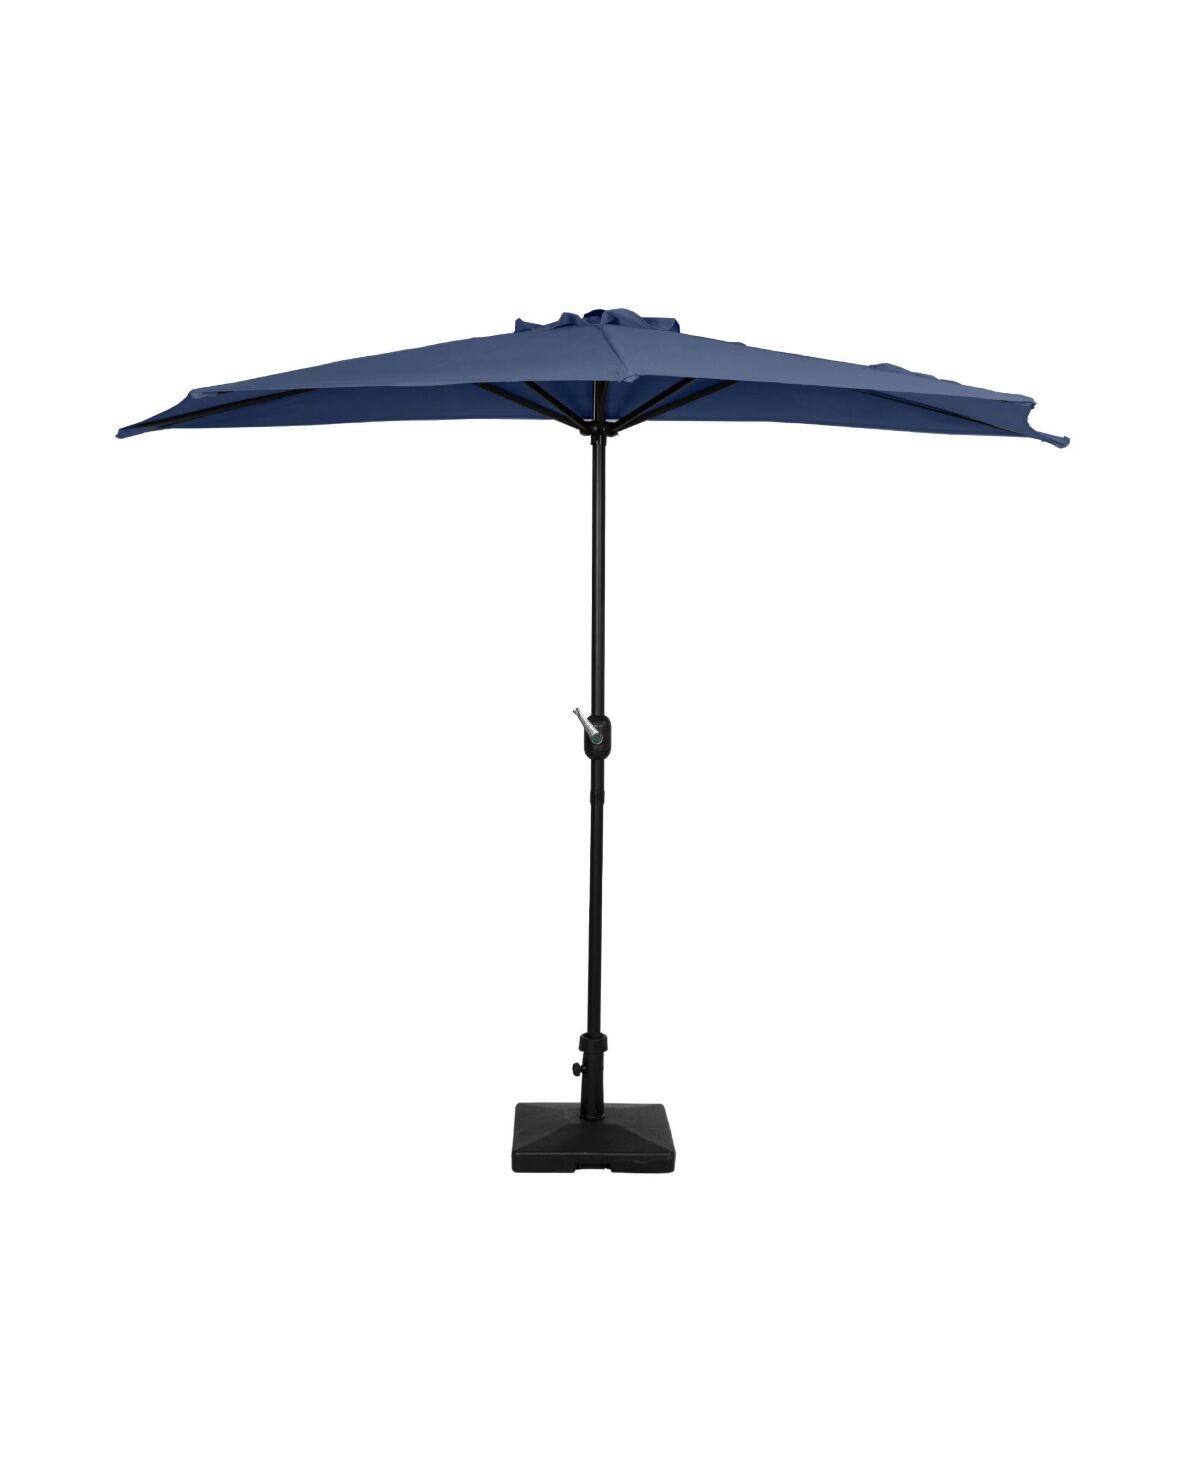 WestinTrends 9 Ft Outdoor Patio Half Market Umbrella with Concrete Weight Base Set - Navy blue